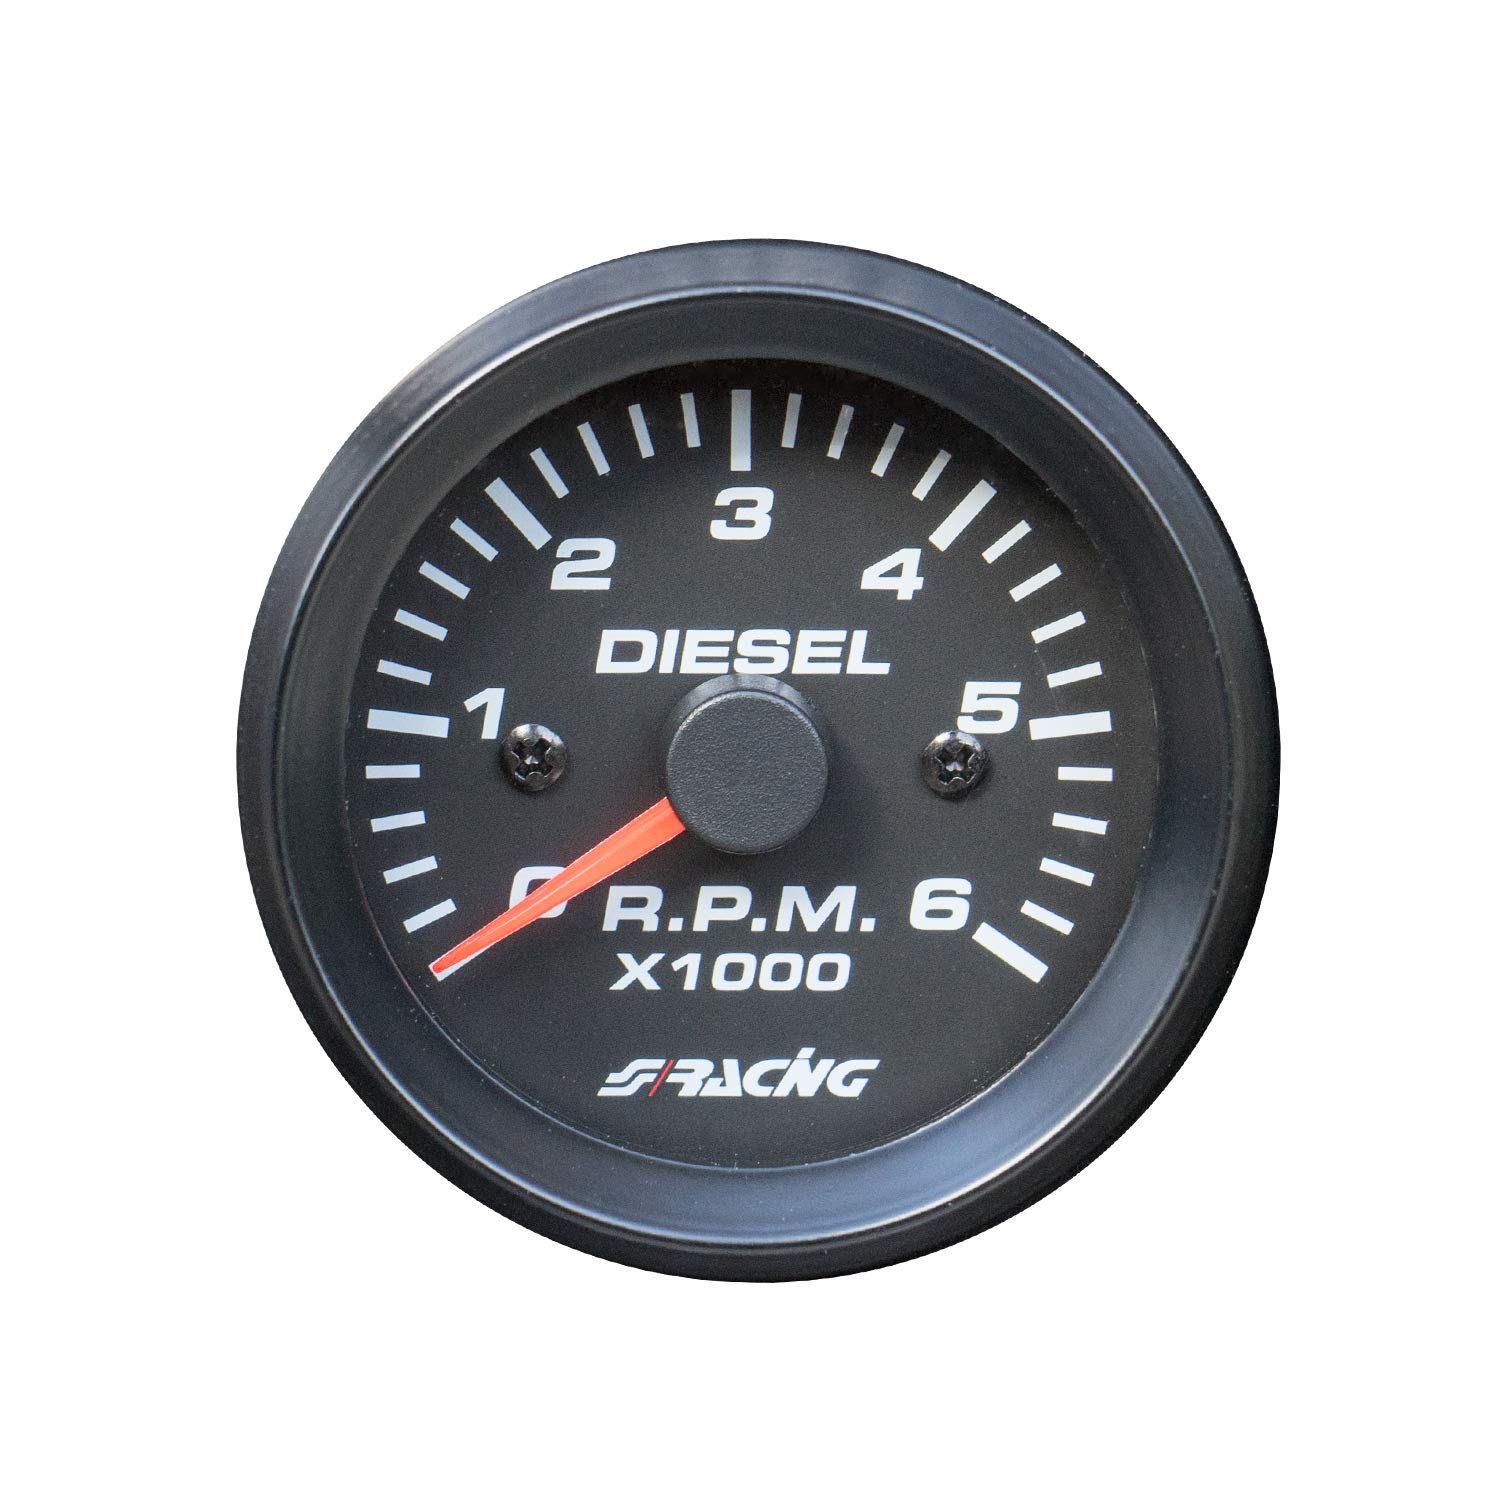 SIMONI RACING TM/BD Black Line 2" Drehzahlmesser 0-6000 RPM für Dieselfahrzeuge von Simoni Racing